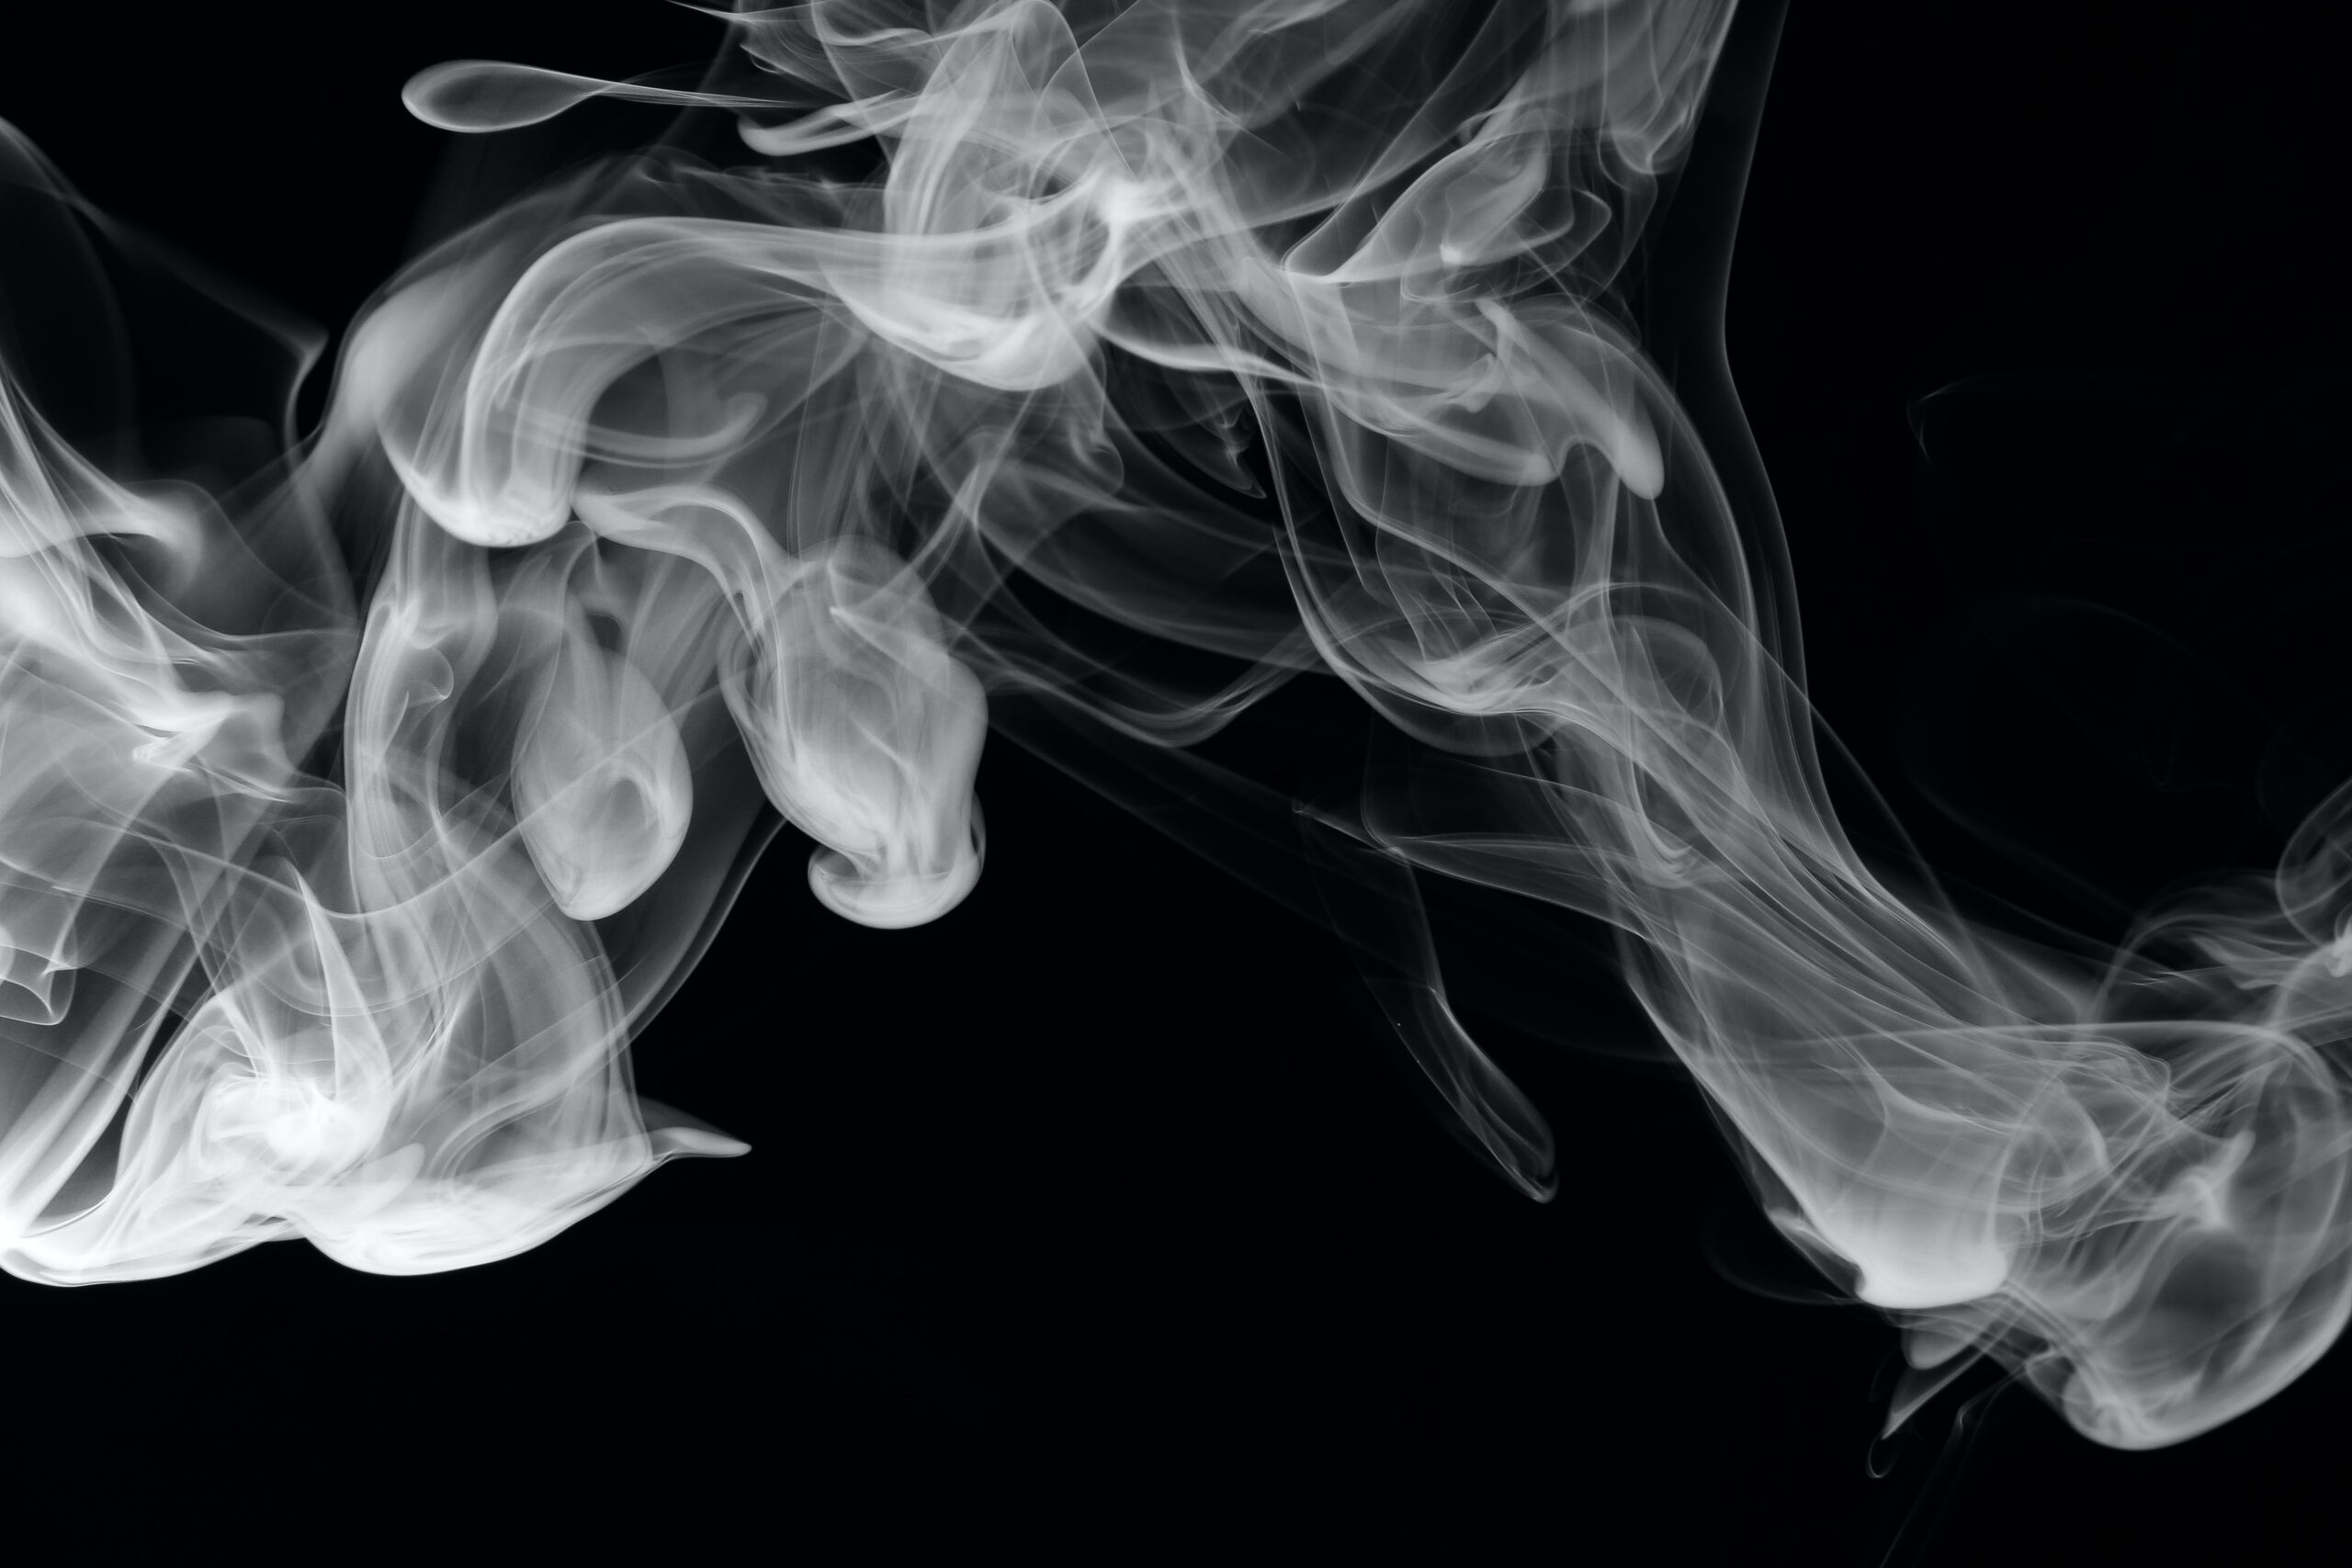 SMOKE AND CARBON MONOXIDE ALARM REGULATIONS